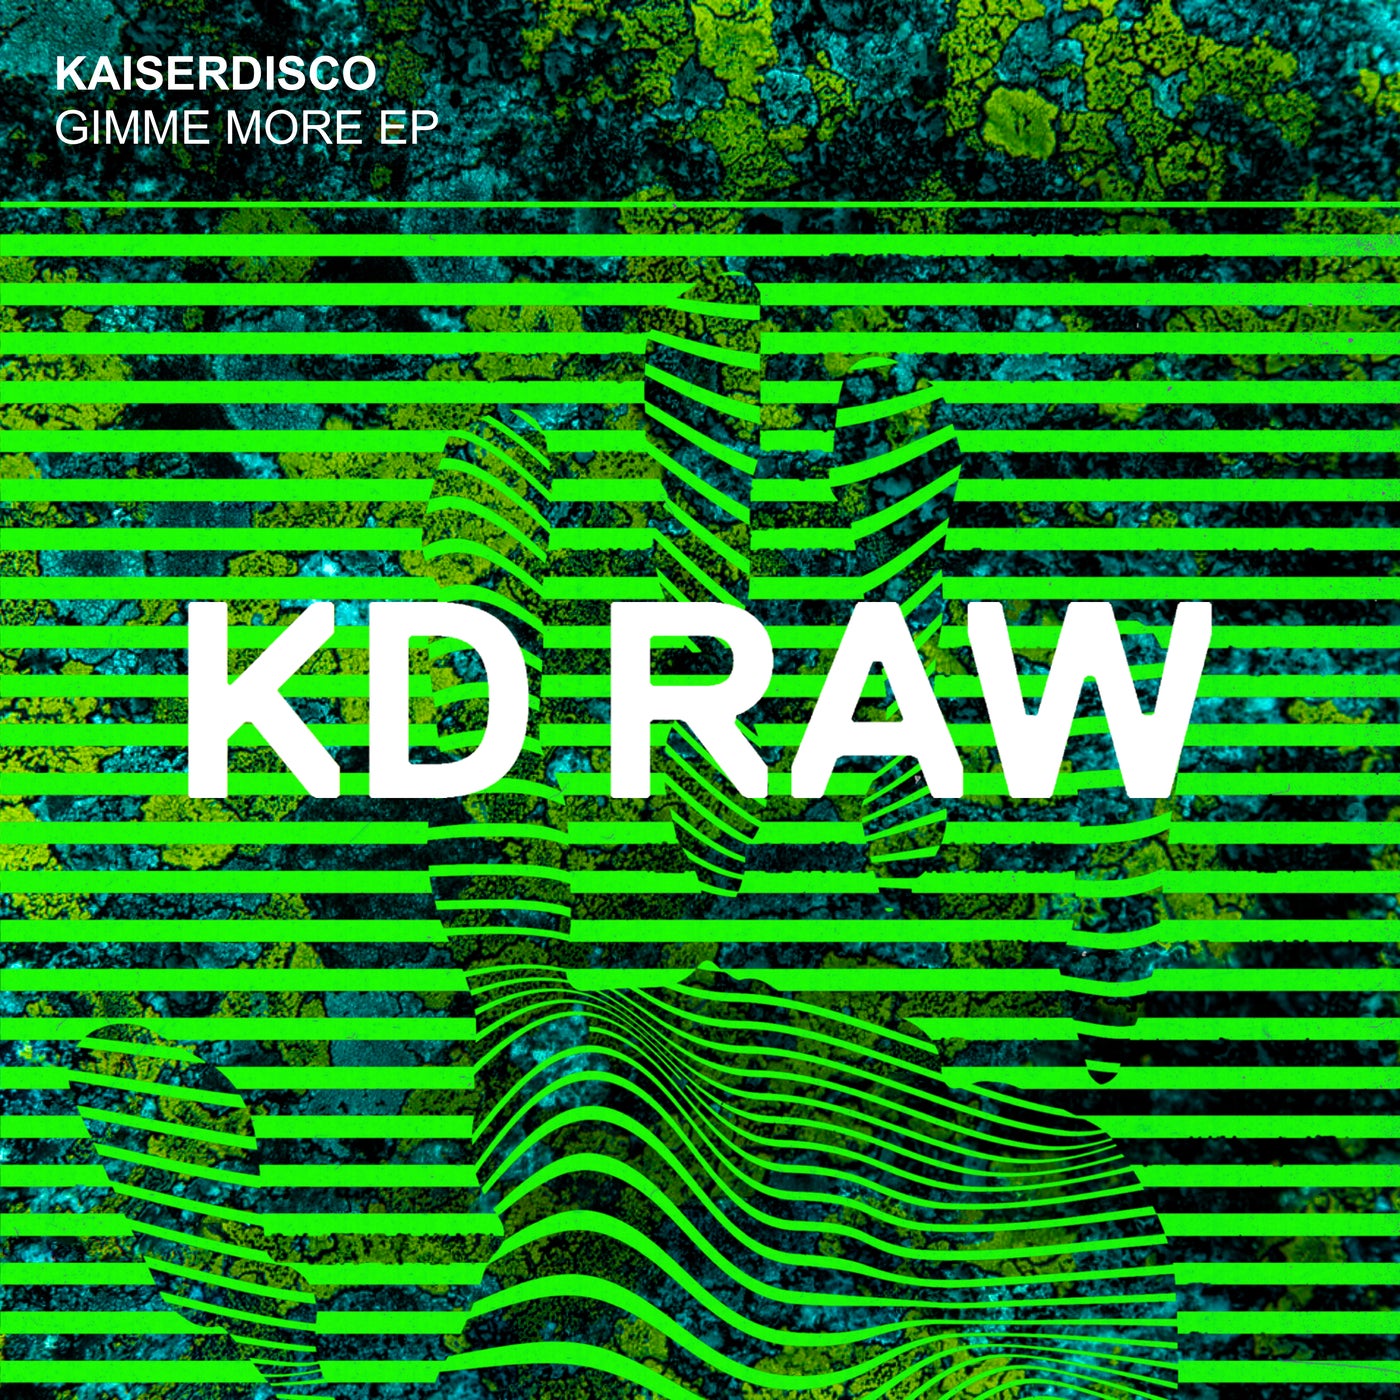 image cover: Kaiserdisco - Gimme More EP on KD RAW